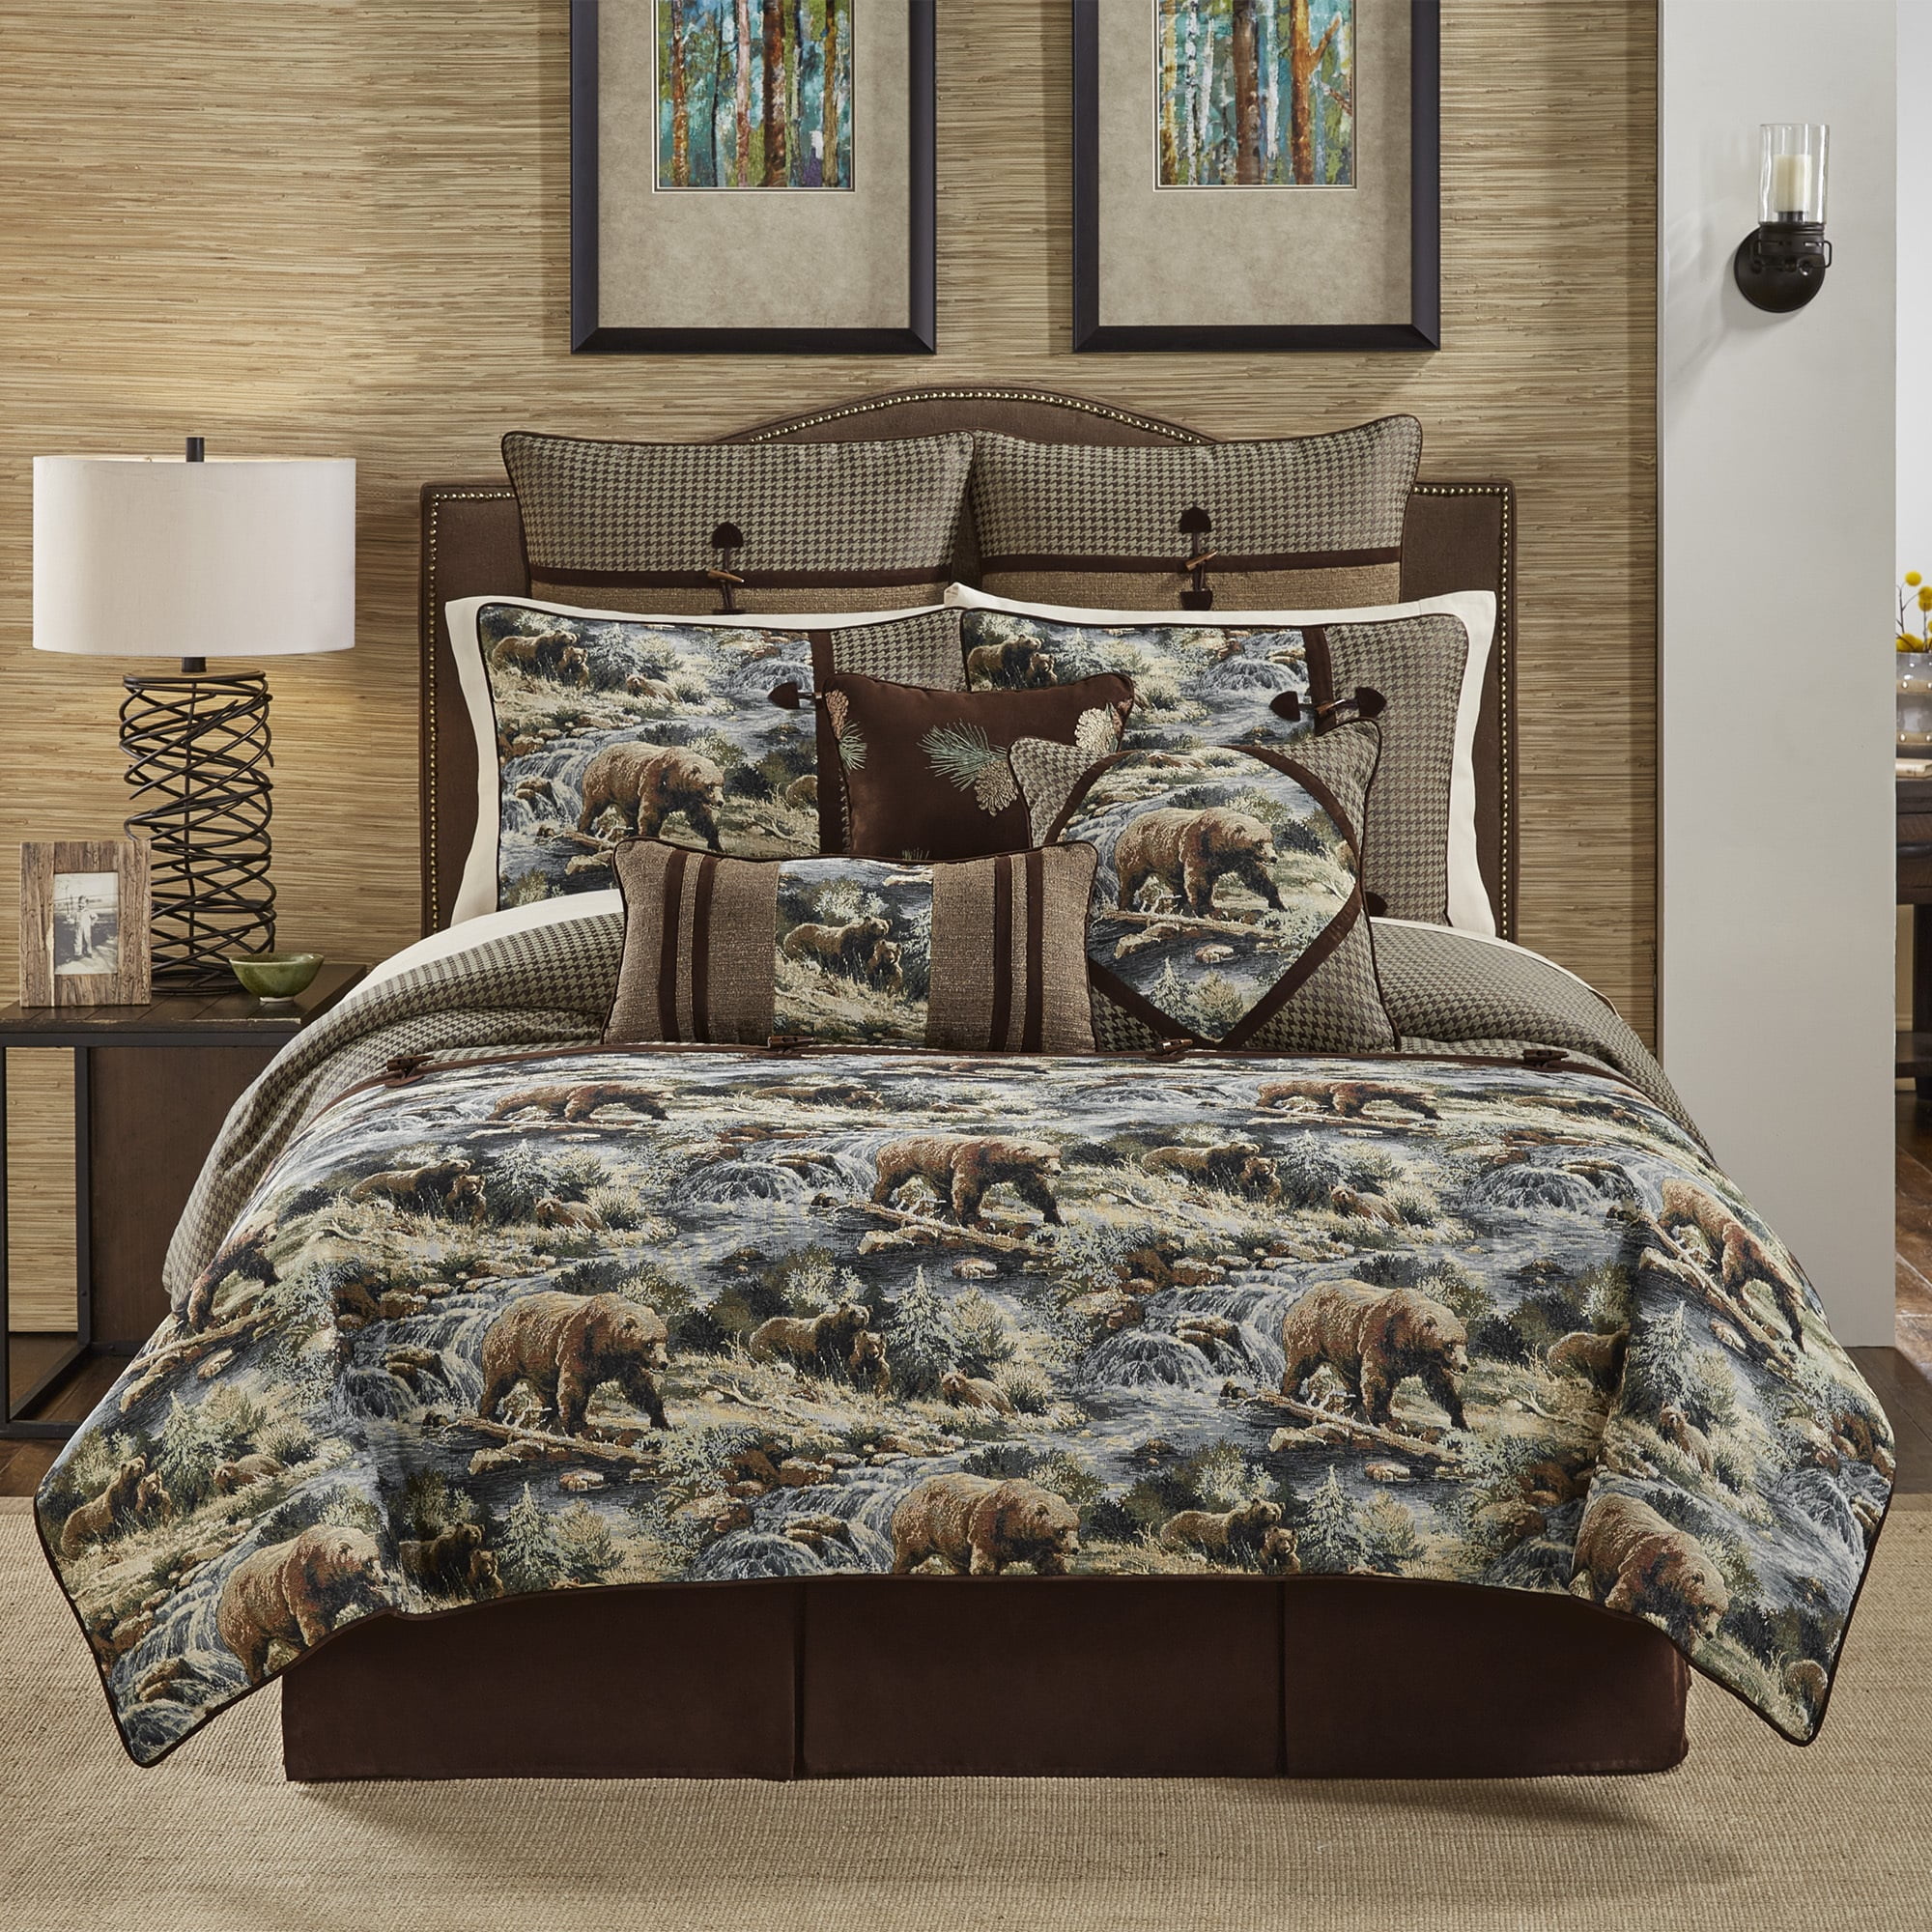 Bedding Croscill Kodiak King Comforter Set 4 Piece